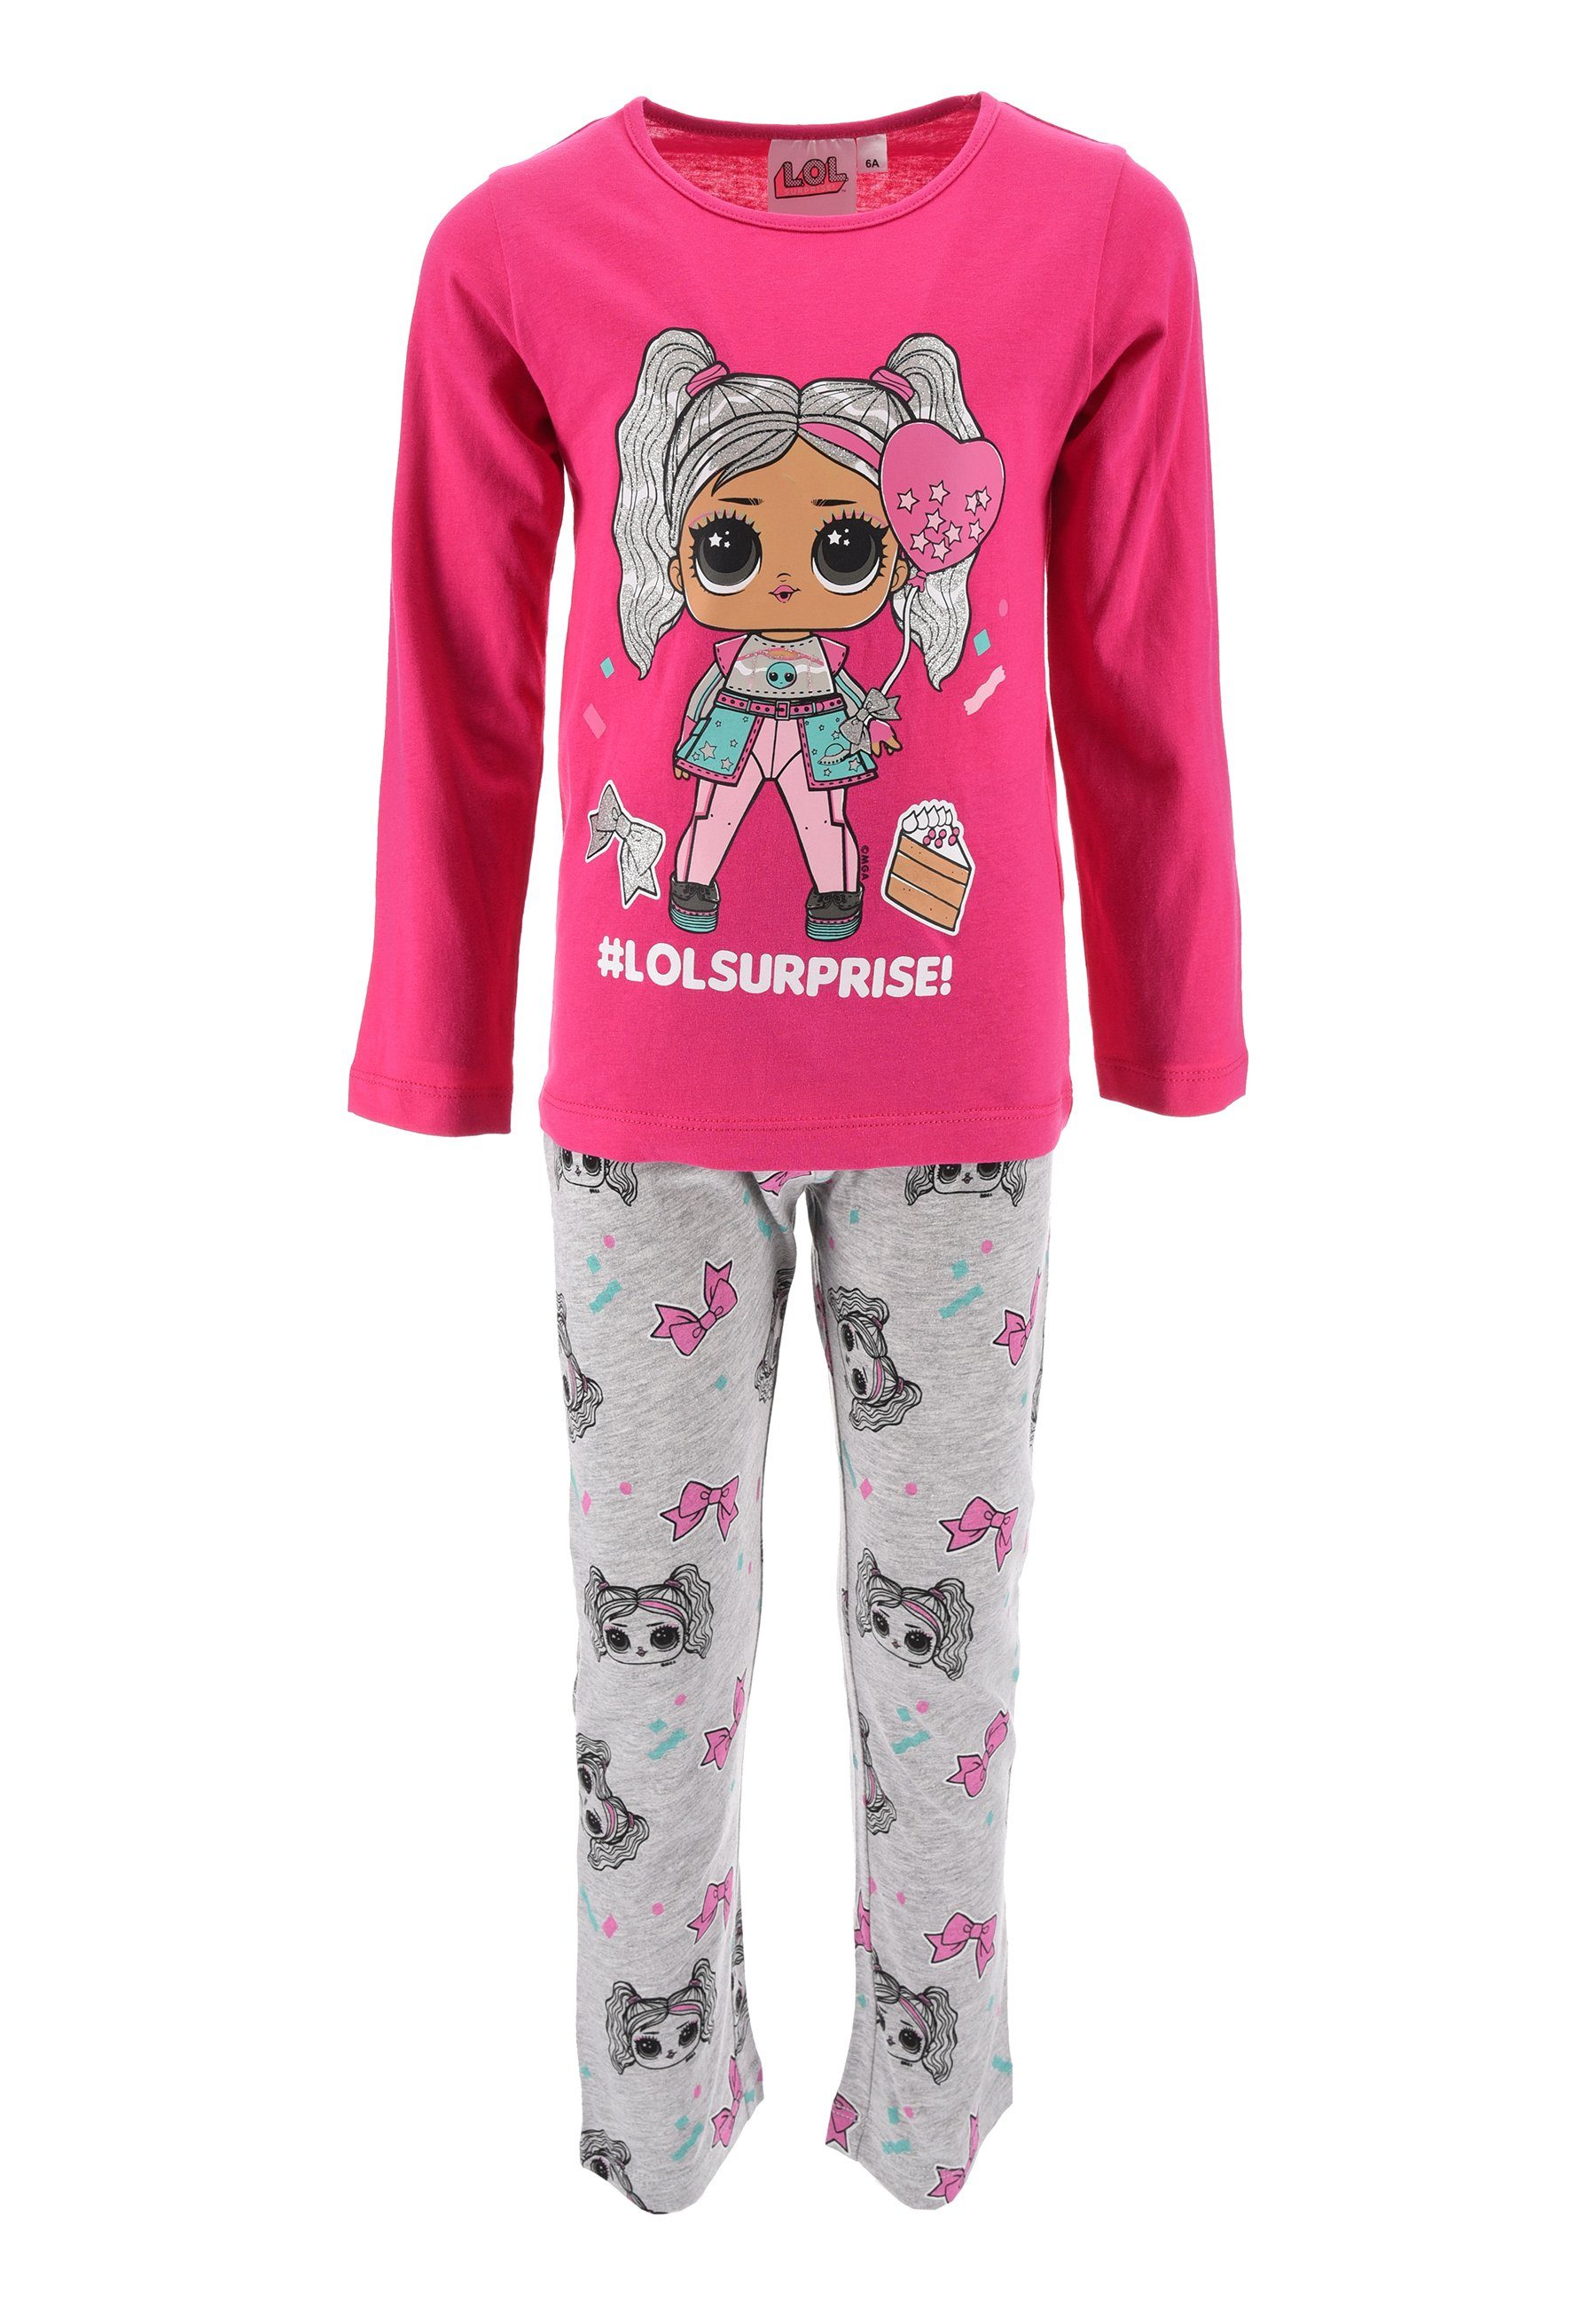 L.O.L. SURPRISE! Schlafanzug Kinder Mädchen Schlafanzug Kinder Pyjama Langarm Shirt + Schlaf-Hose (2 tlg) Pink